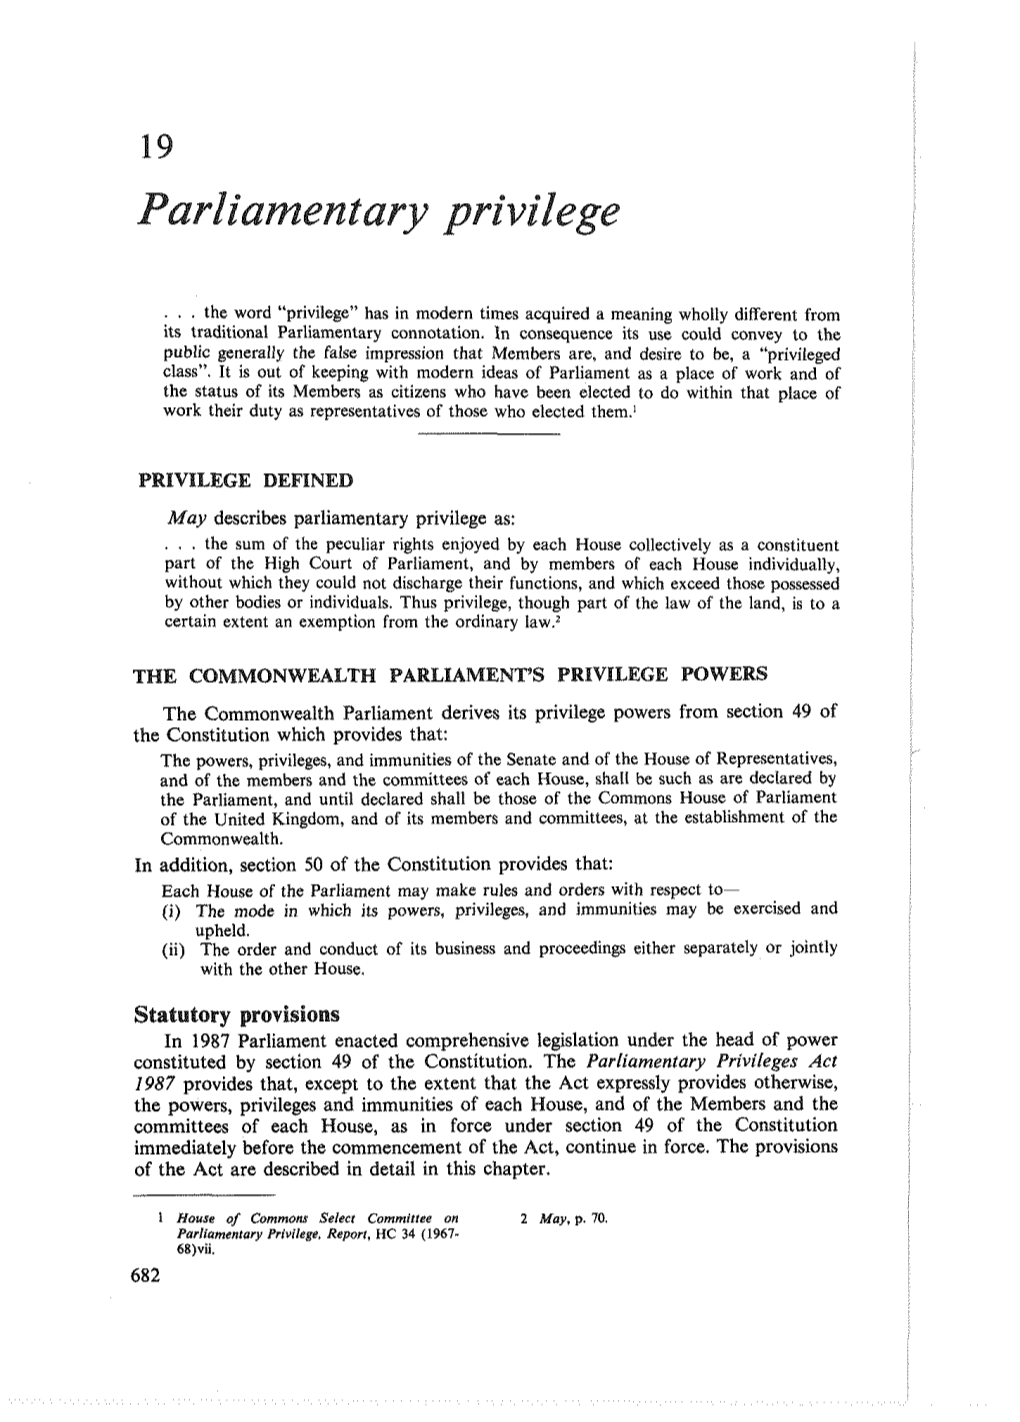 Parliamentary Privilege As: